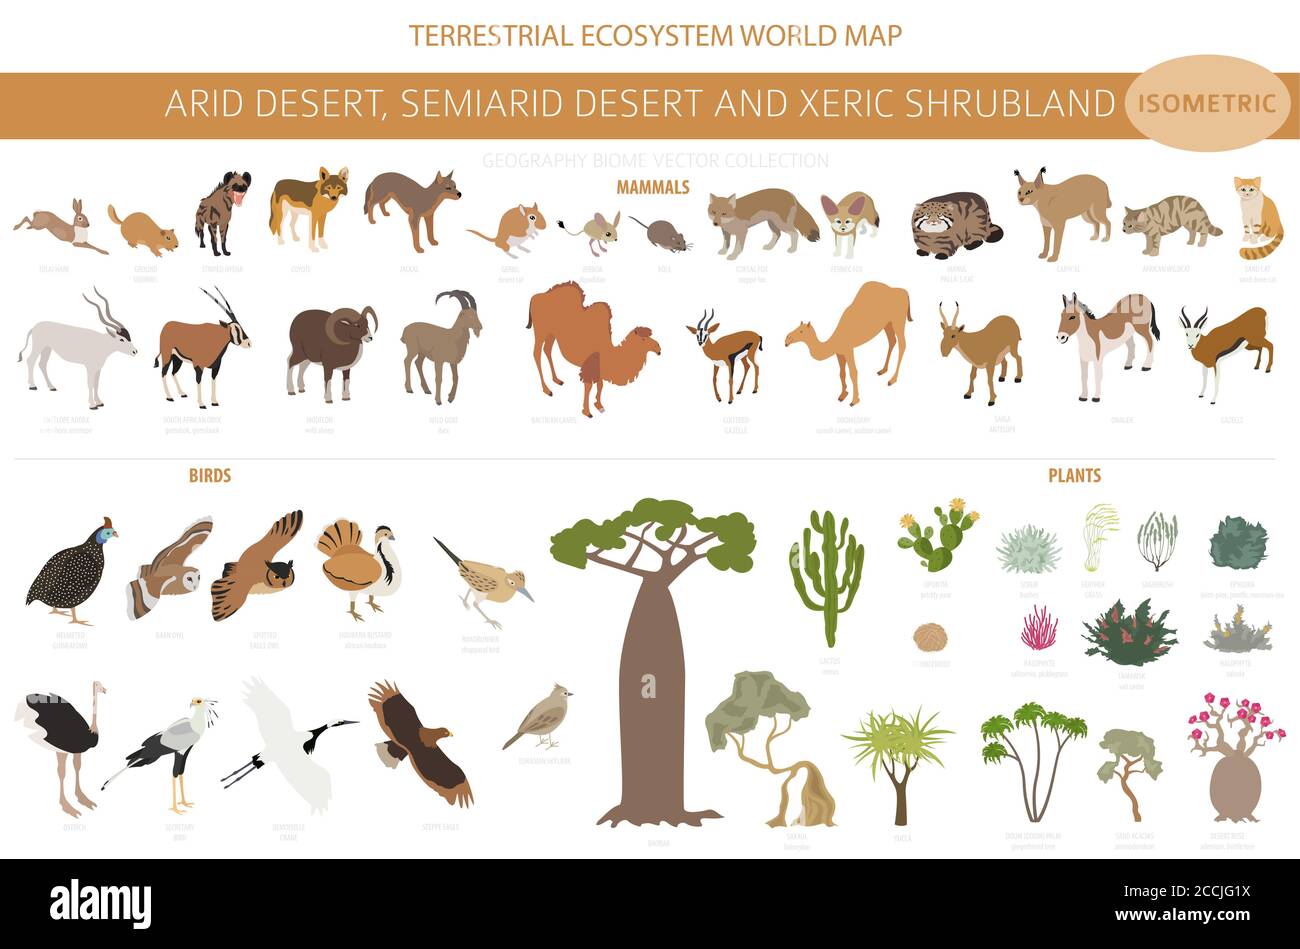 Desert biome, xeric shrubland biome, natural region infographic. Terrestrial ecosystem world map. Animals, birds and vegetations isometric design set. Stock Vector